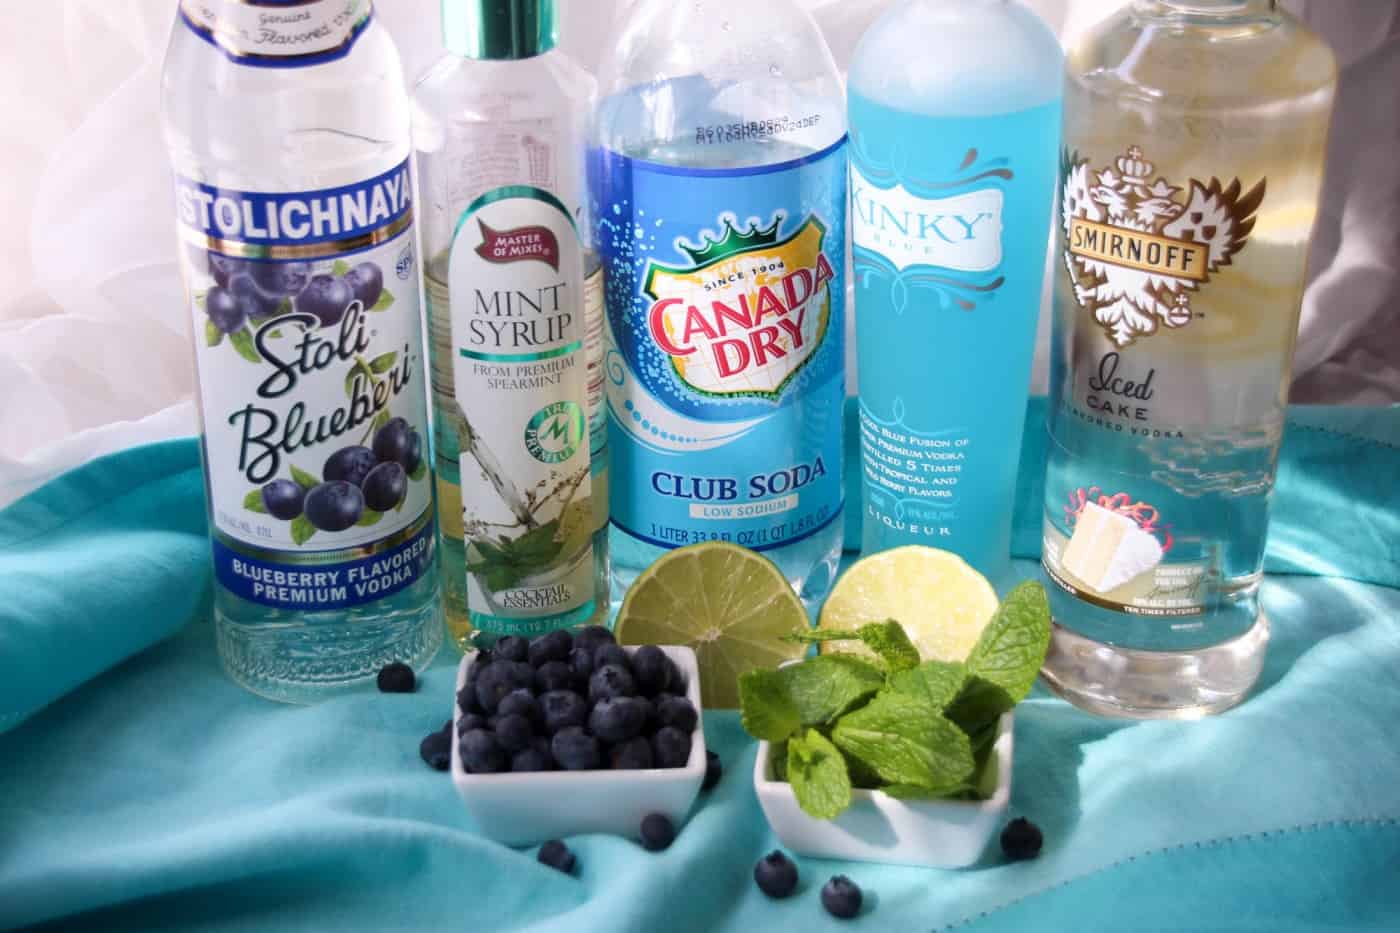 Stoli Blueberi vodka, mint syrup, Canada Dry club soda, Smirnoff iced cake vodka, Kinky blue